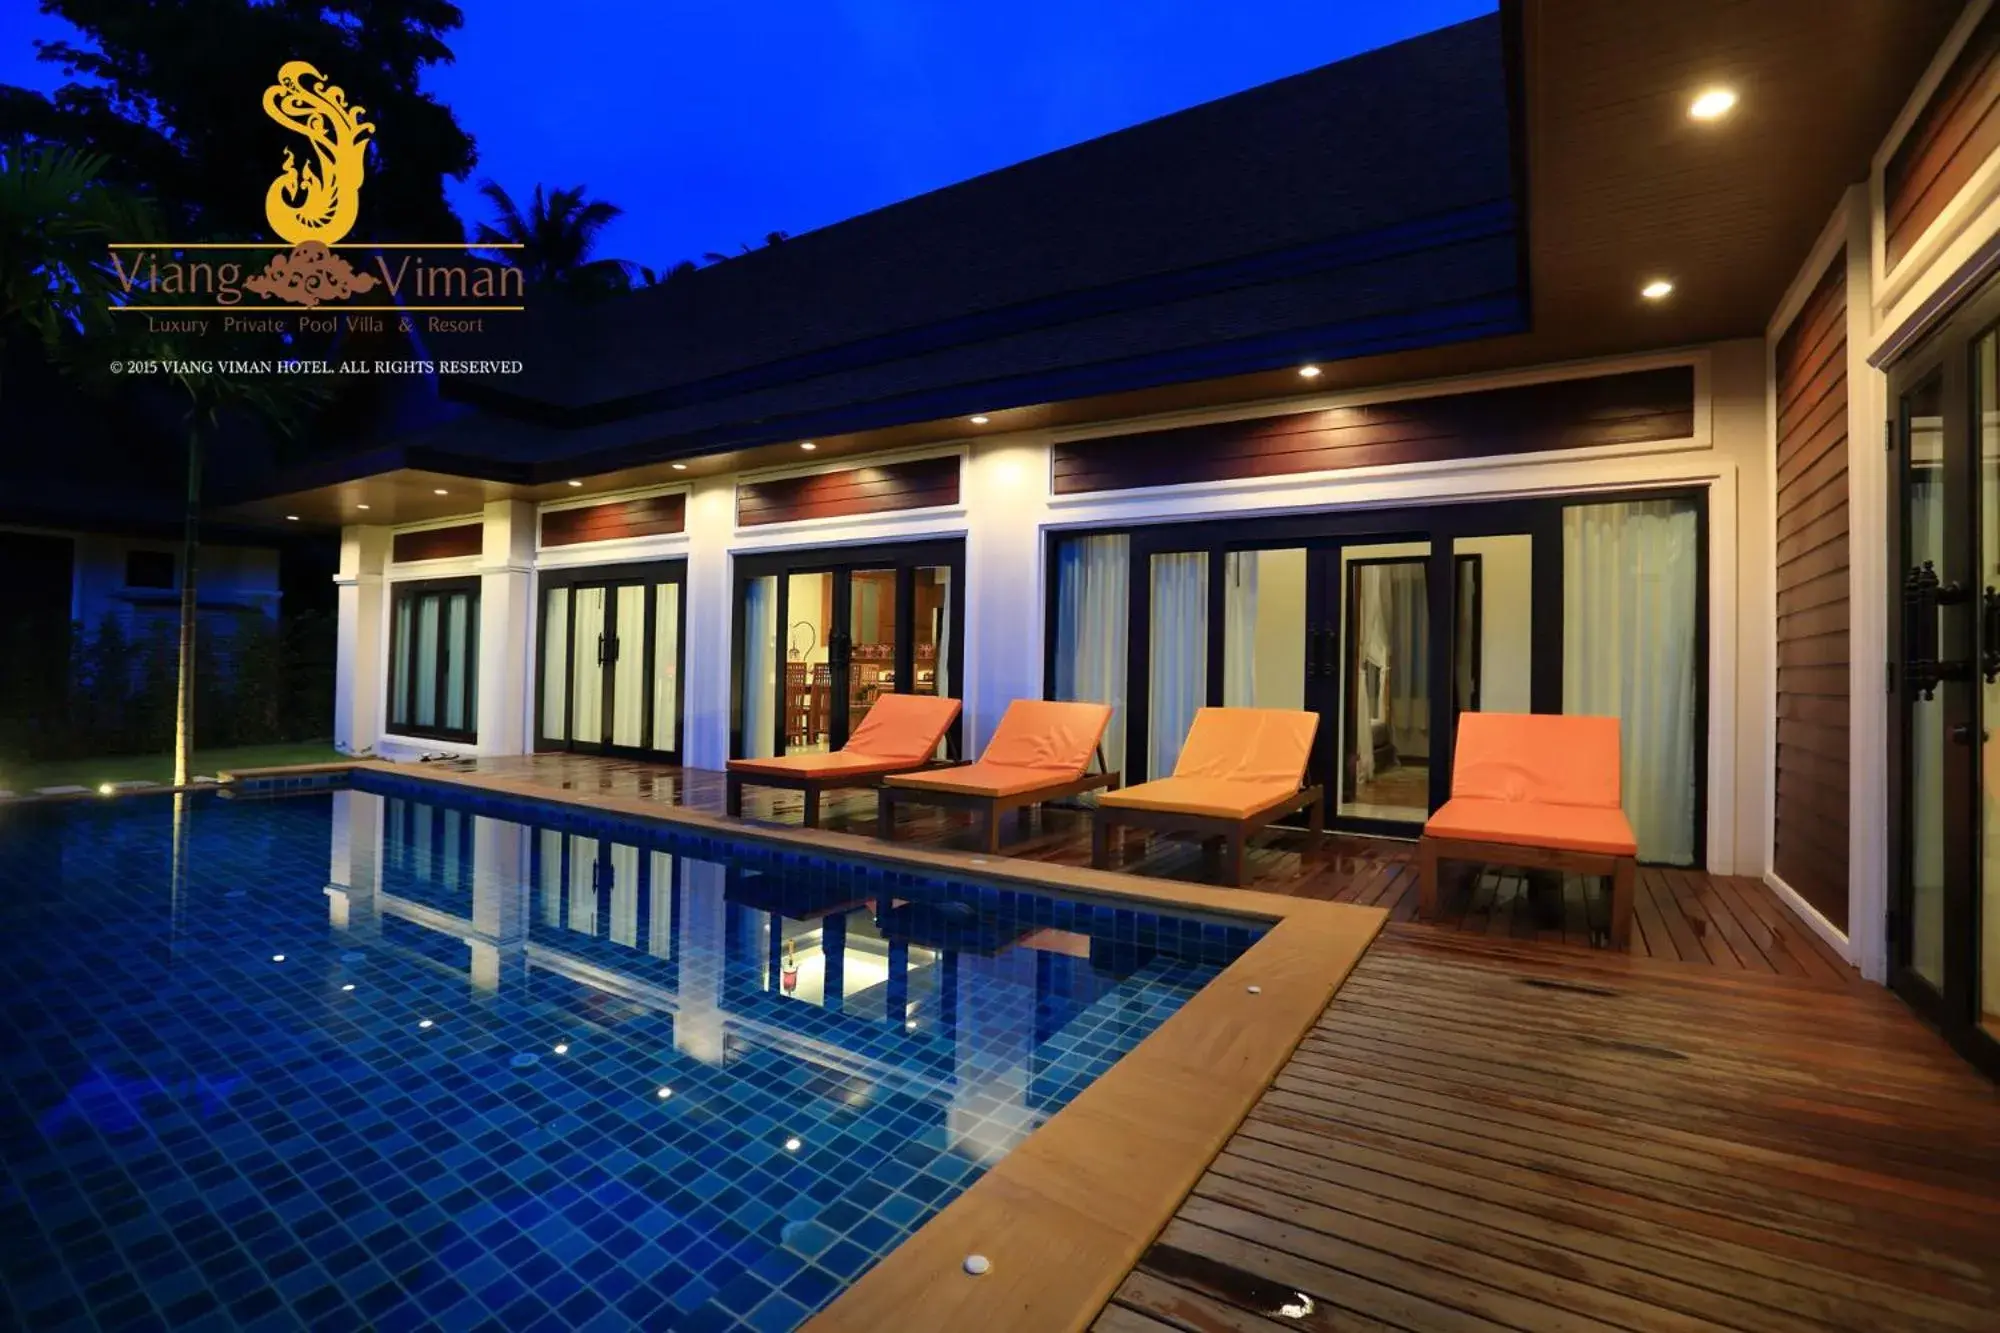 Swimming Pool in Viangviman Luxury Resort, Krabi